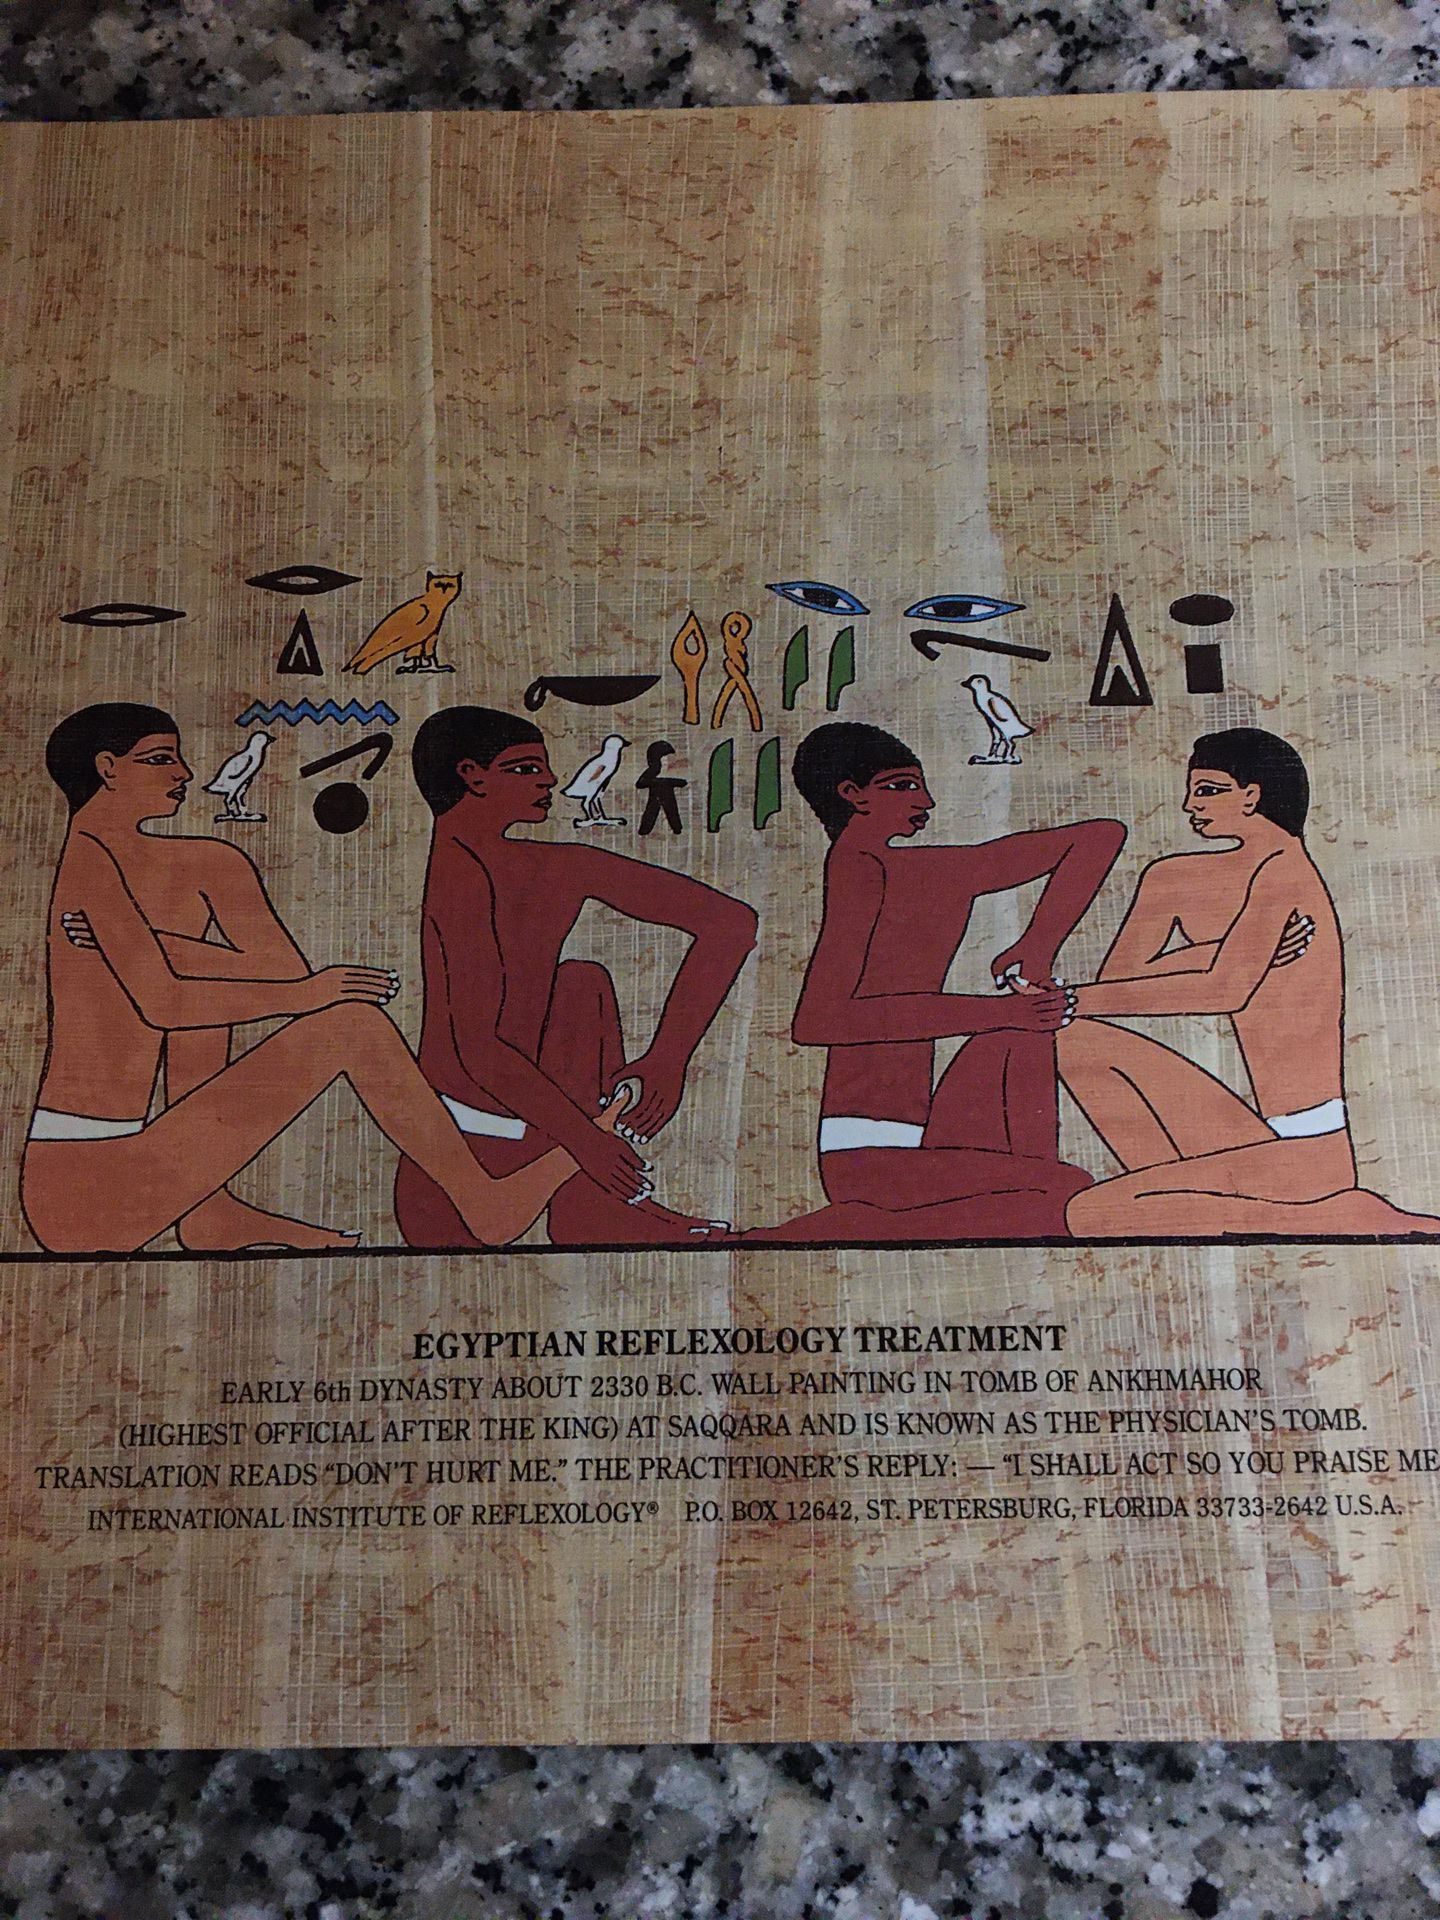 9” x 12” Egyptian Reflexology Treatment print, unframed, Fine condition